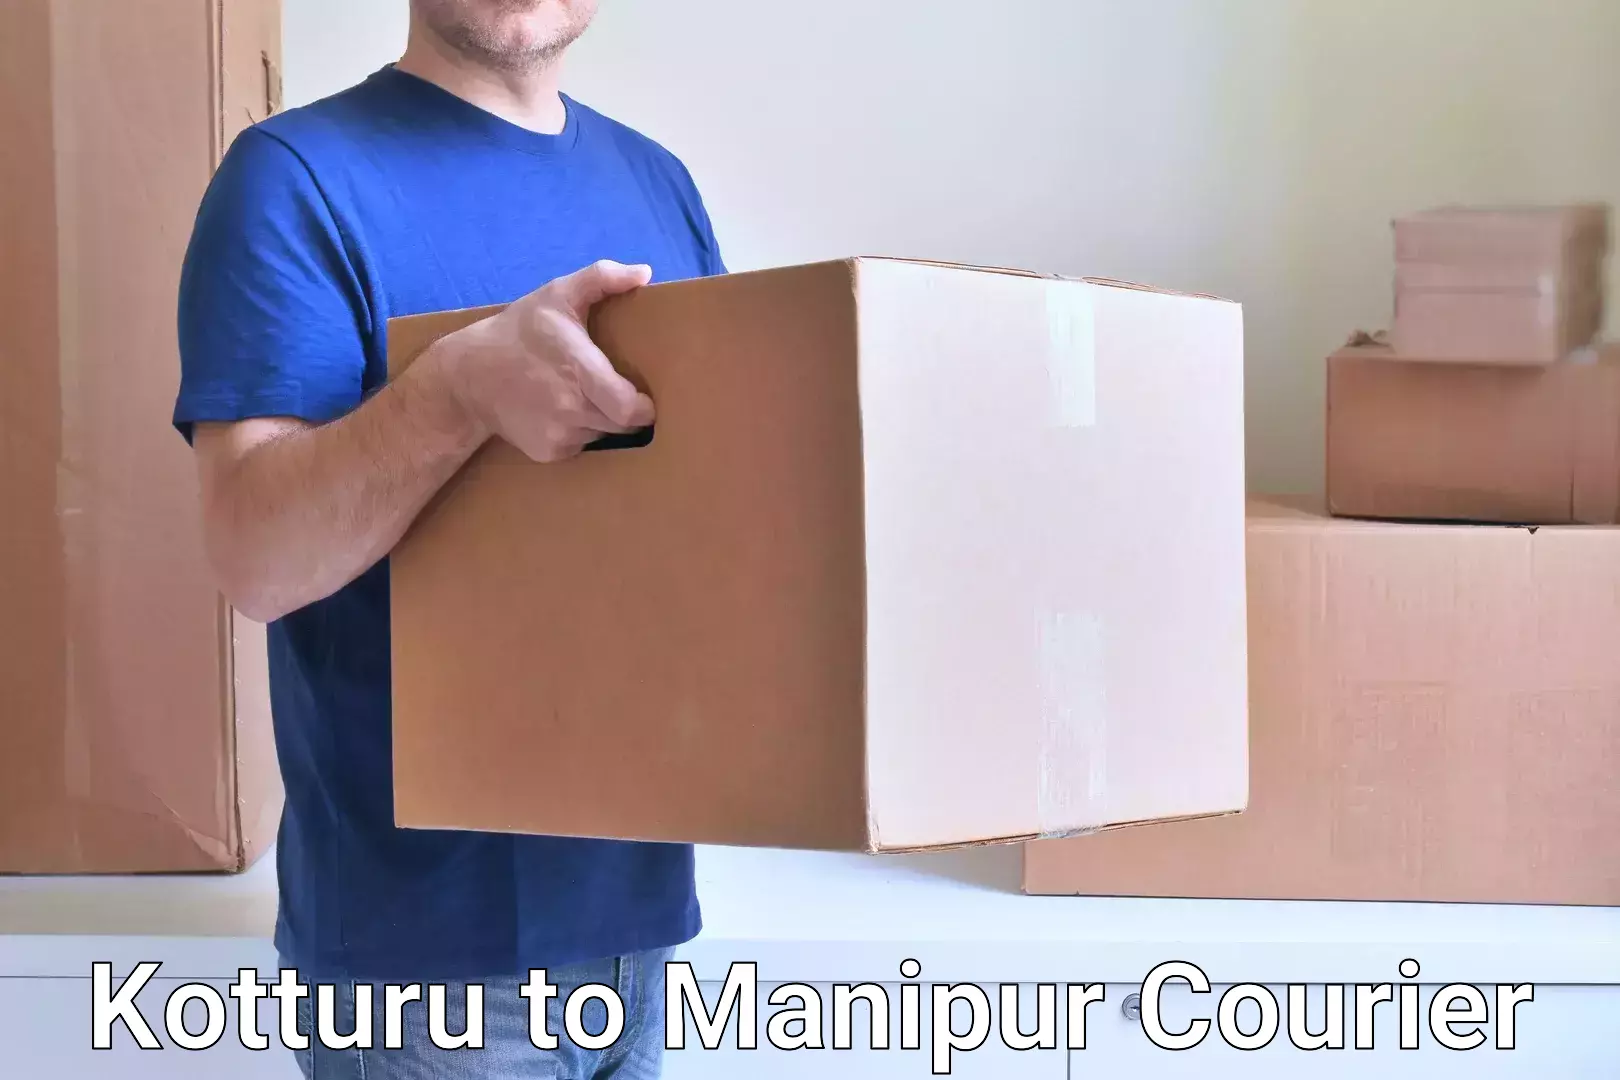 Courier service innovation Kotturu to Manipur